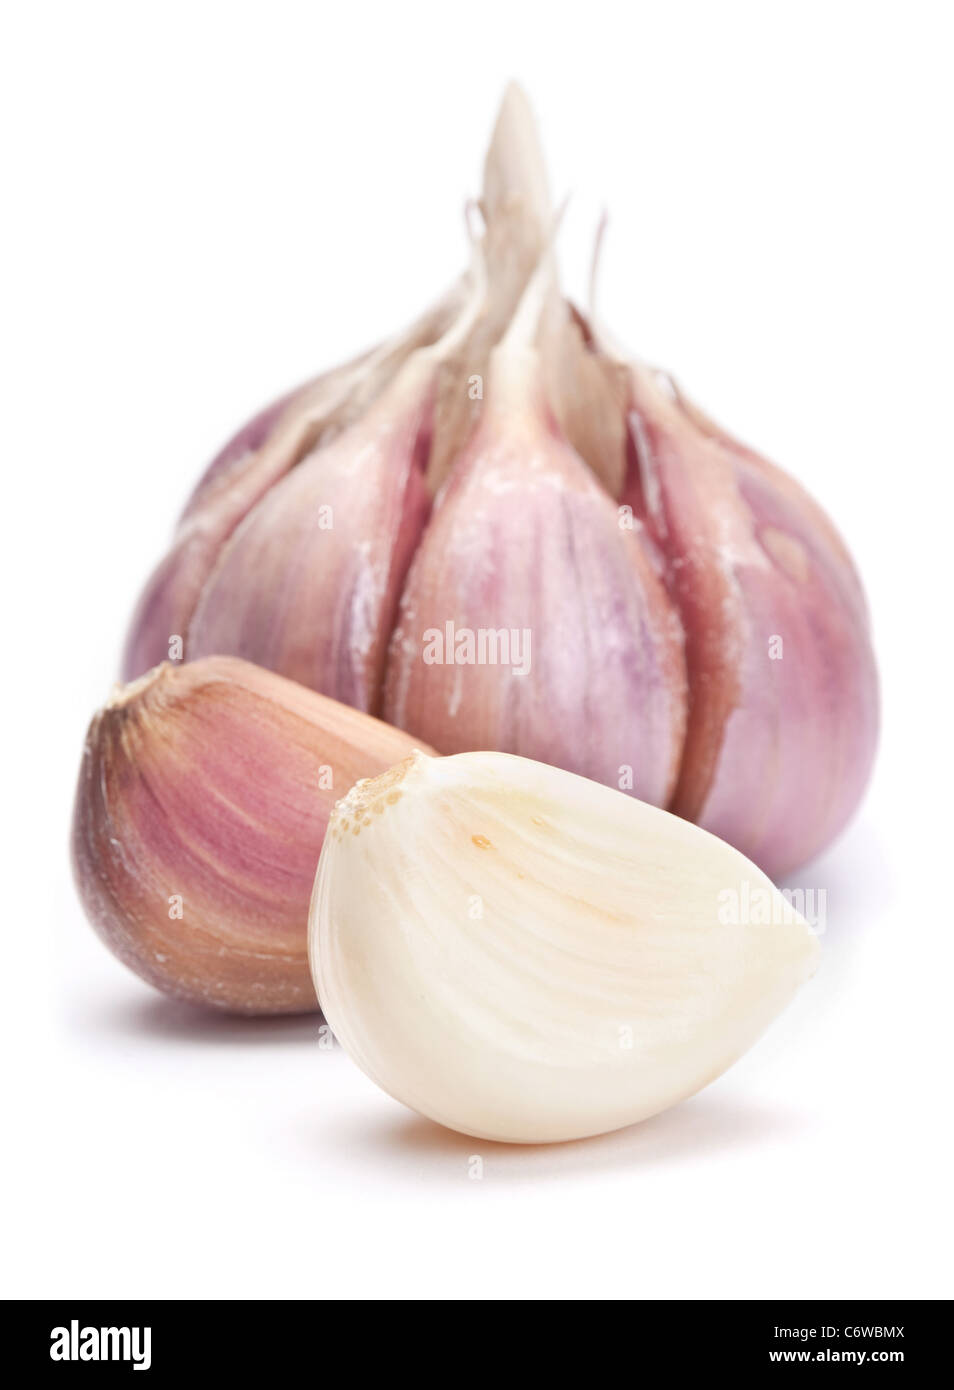 Garlic vegetable closeup isolated on white background Stock Photo